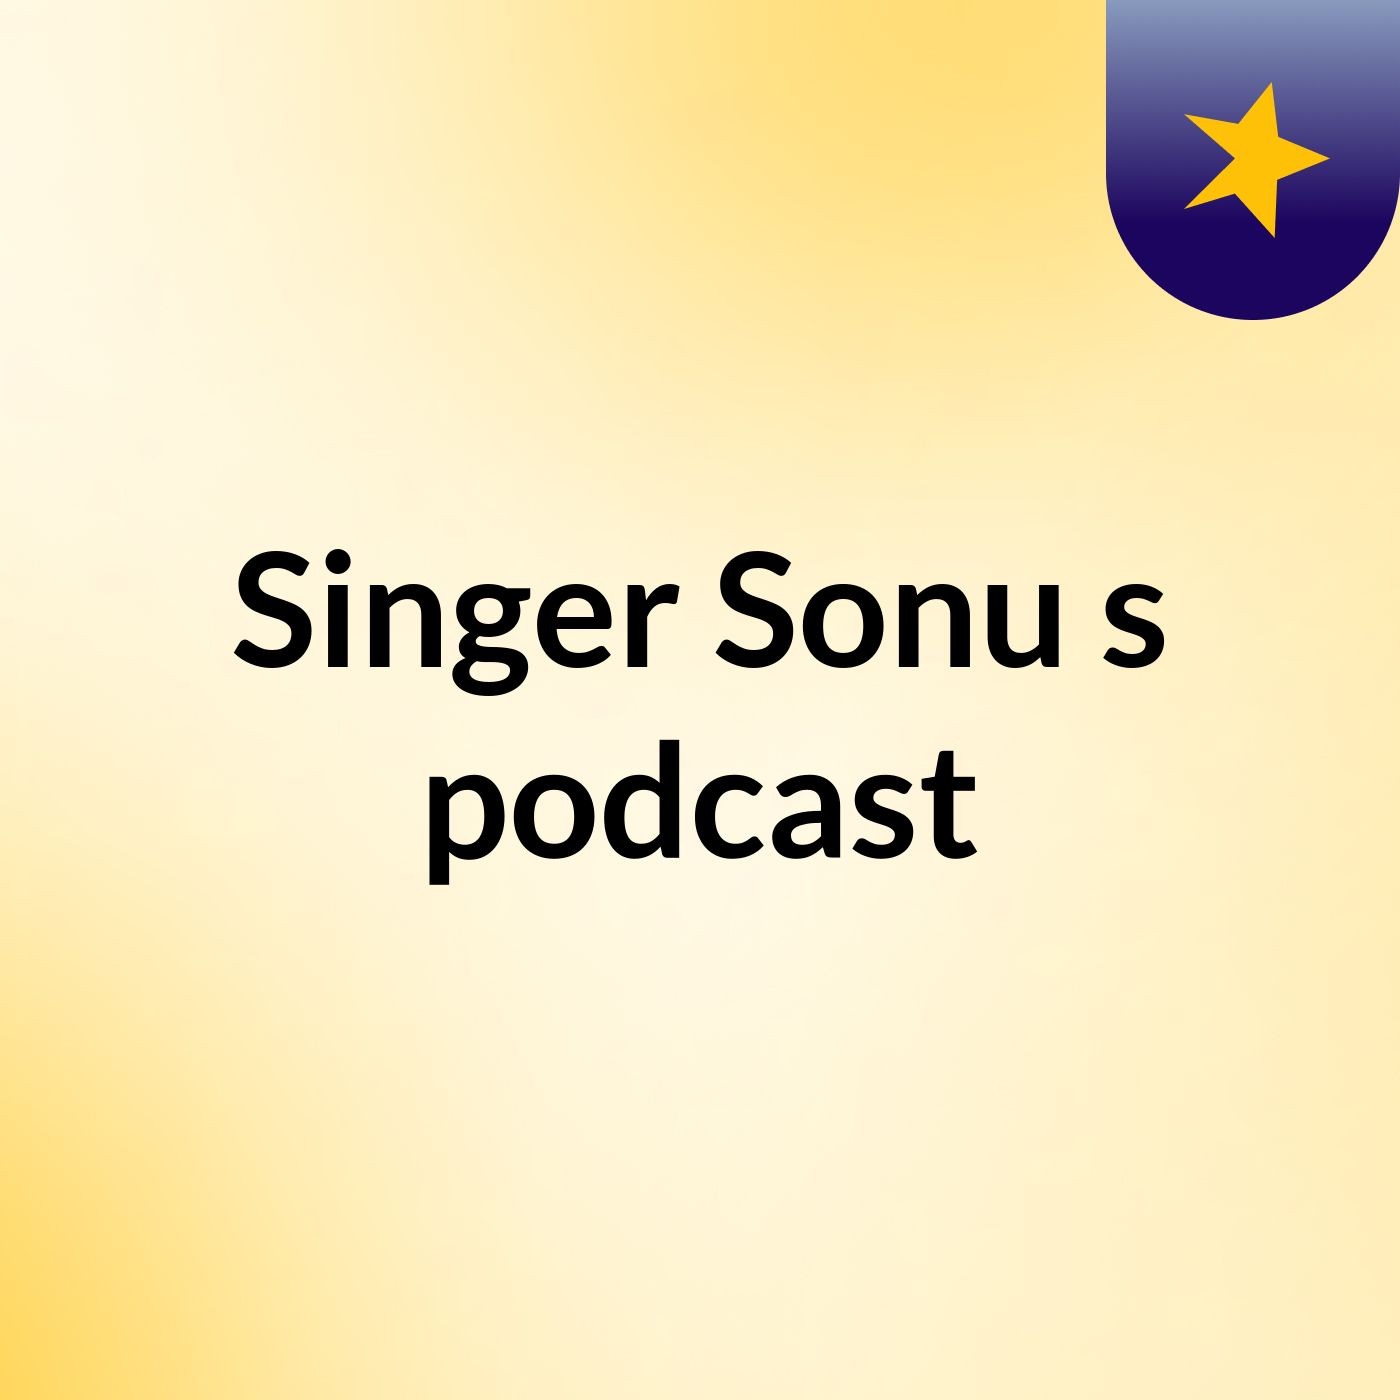 Singer Sonu's podcast